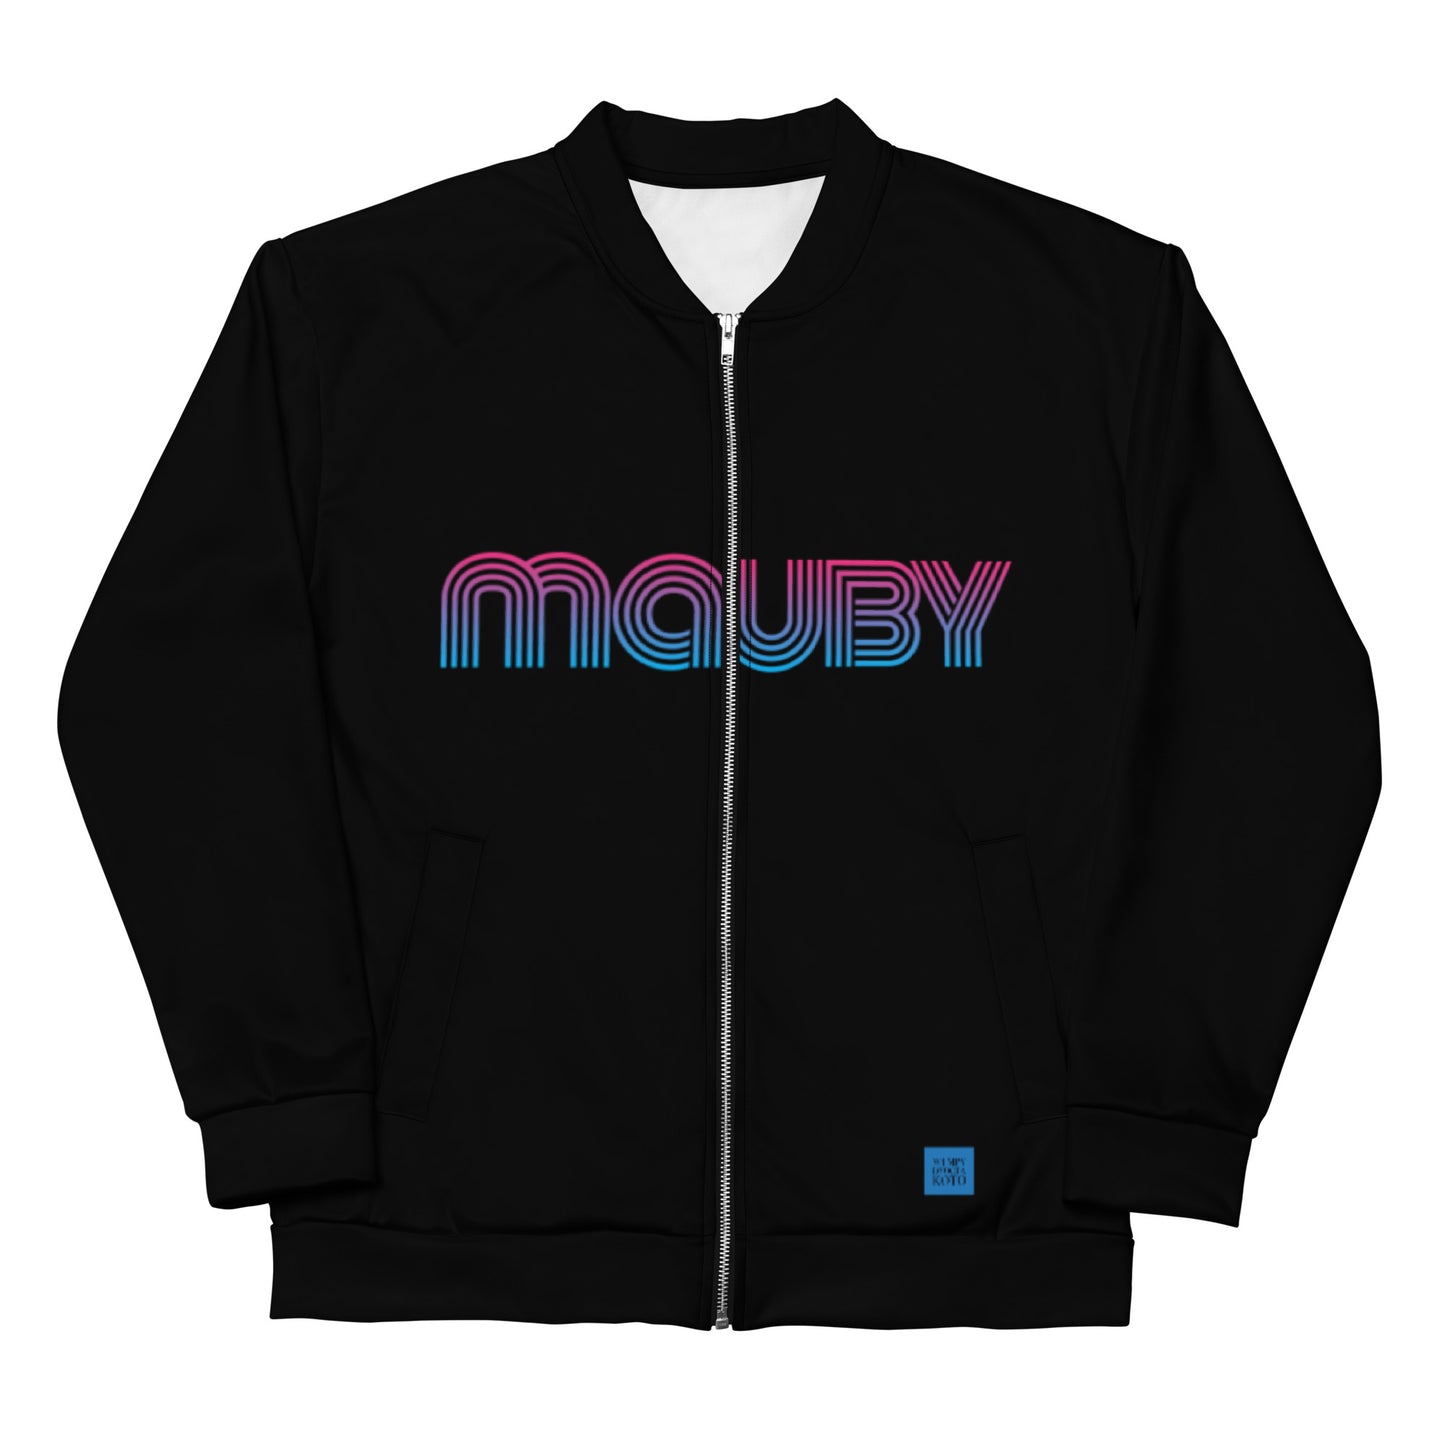 Mauby - Sustainably Made Jacket